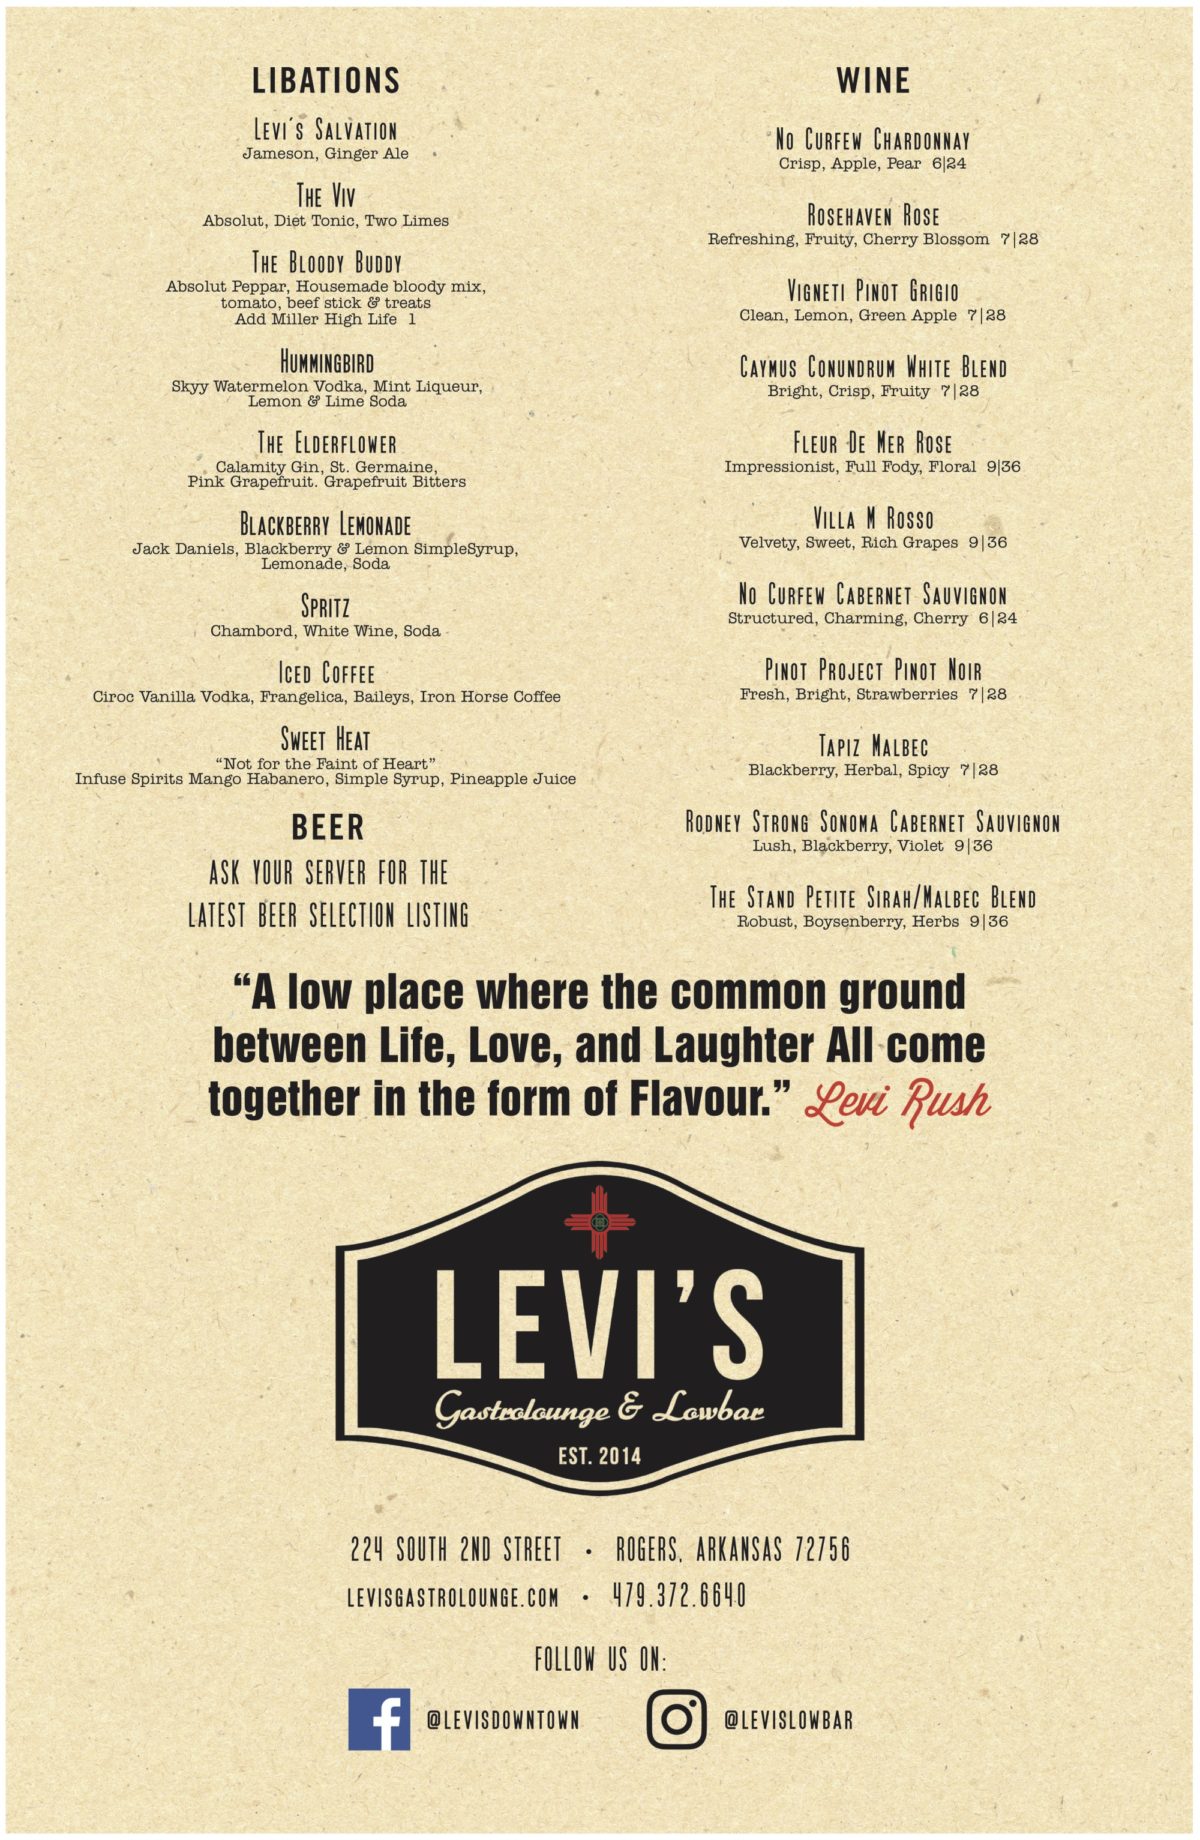 Levi's Gastrolounge & Bar Menu 2